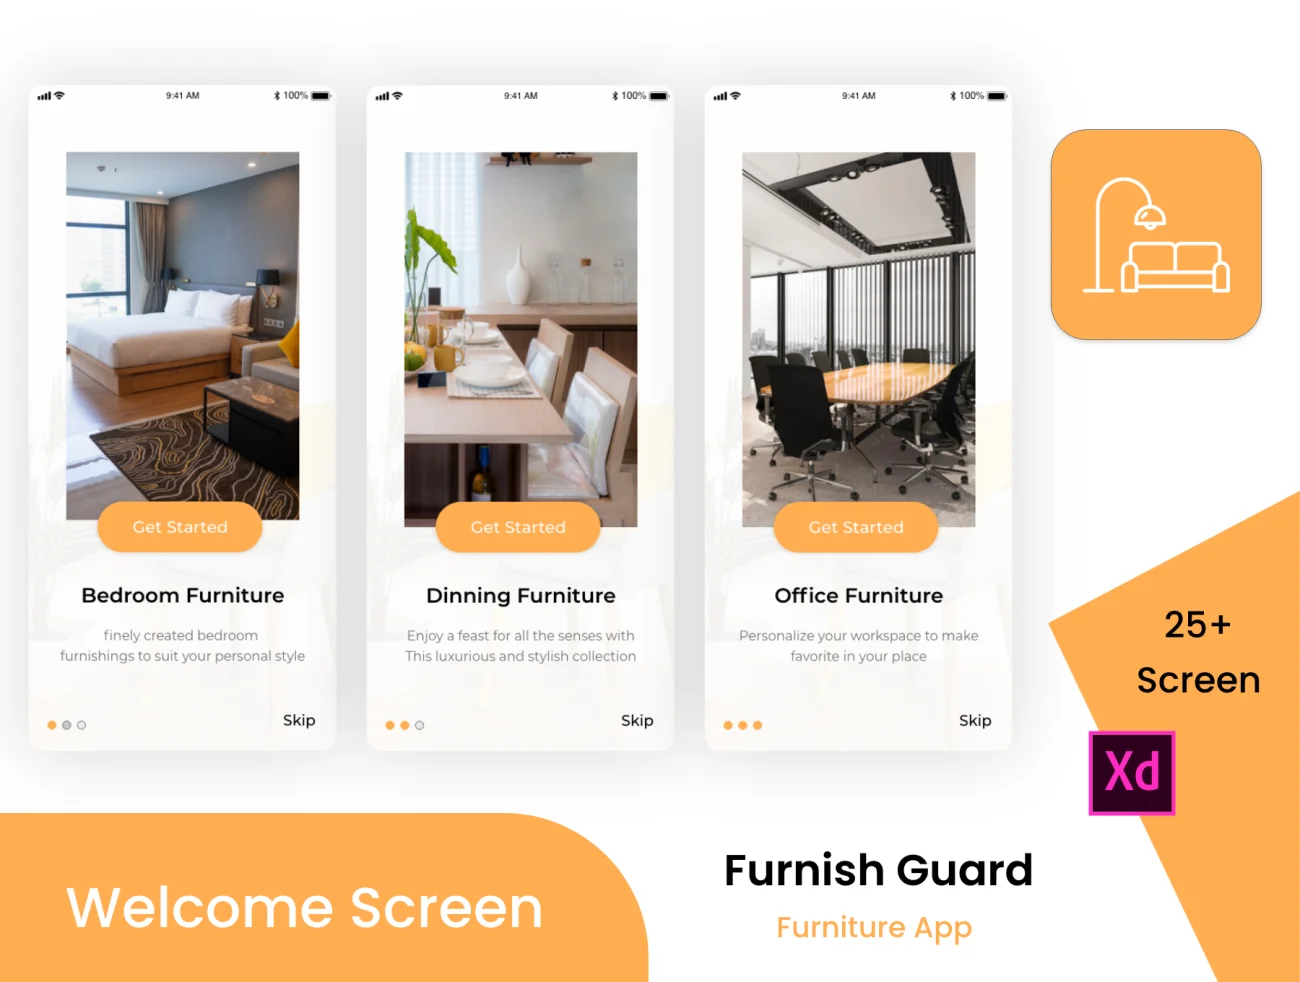 Furnish Guard Furniture App 家居家装app模板设计-UI/UX、ui套件、主页、介绍、付款、列表、卡片式、引导页、登录页、着陆页、社交、网站、网购-到位啦UI